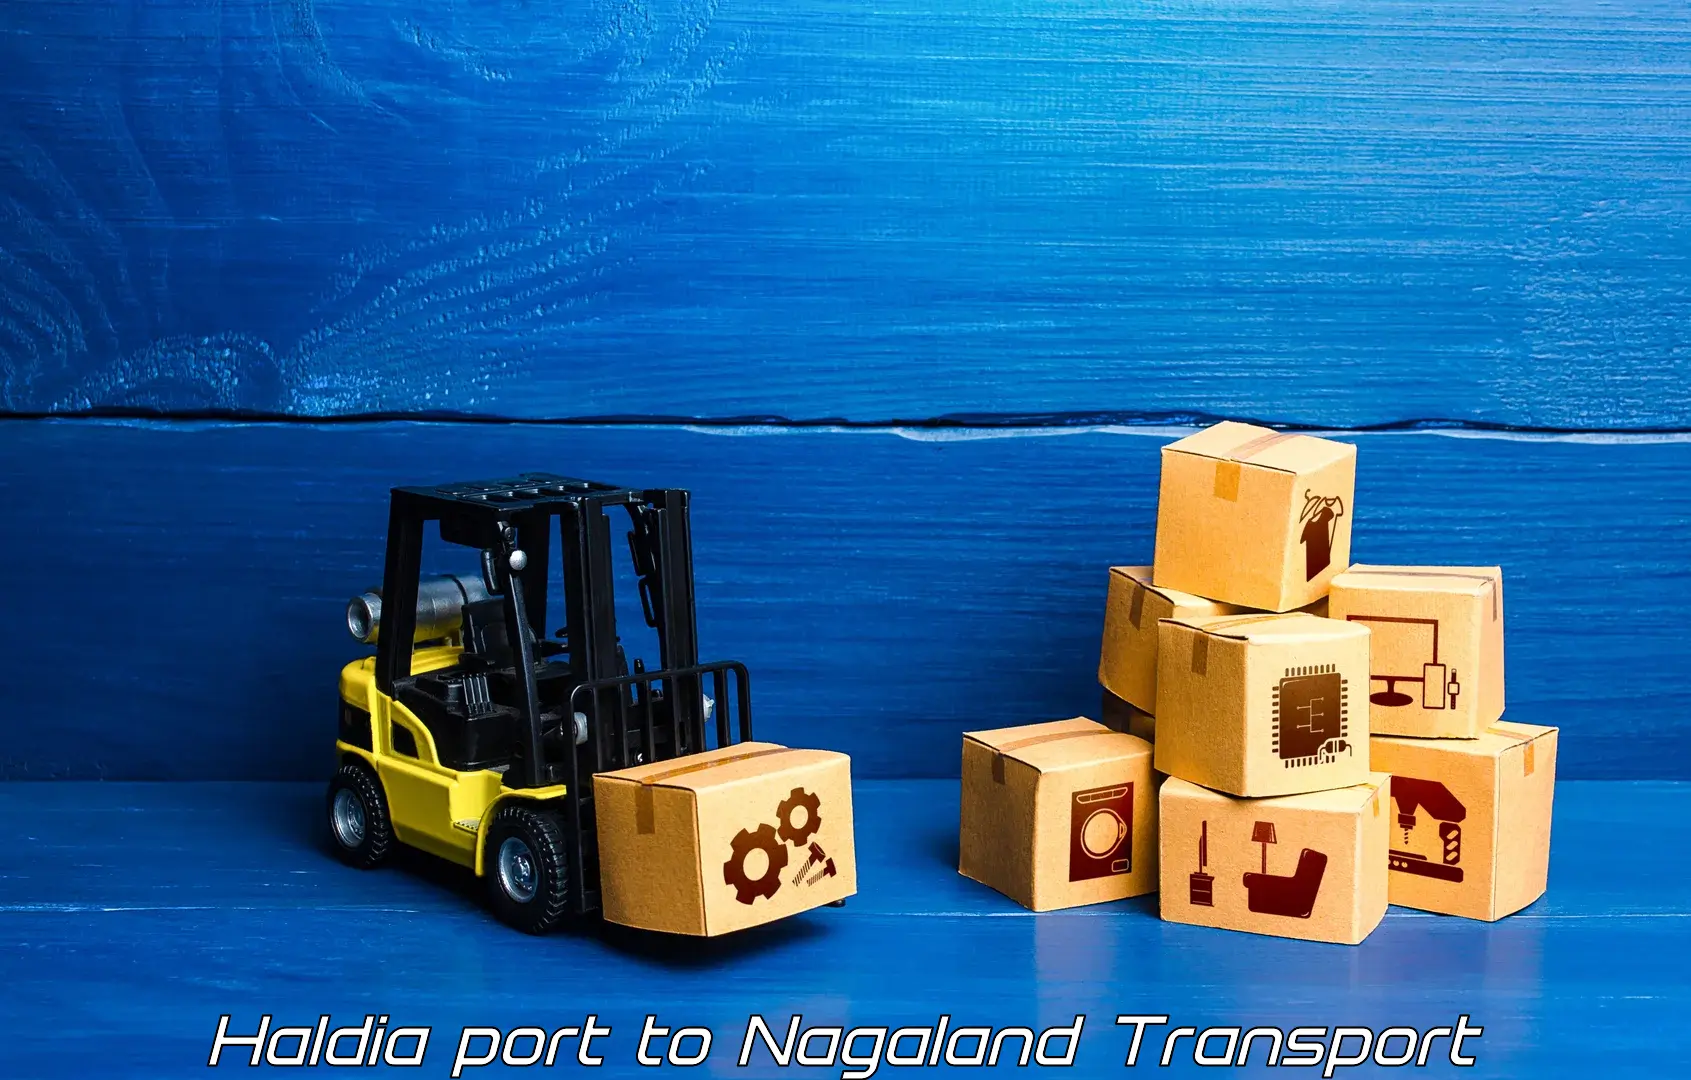 Cycle transportation service Haldia port to Nagaland